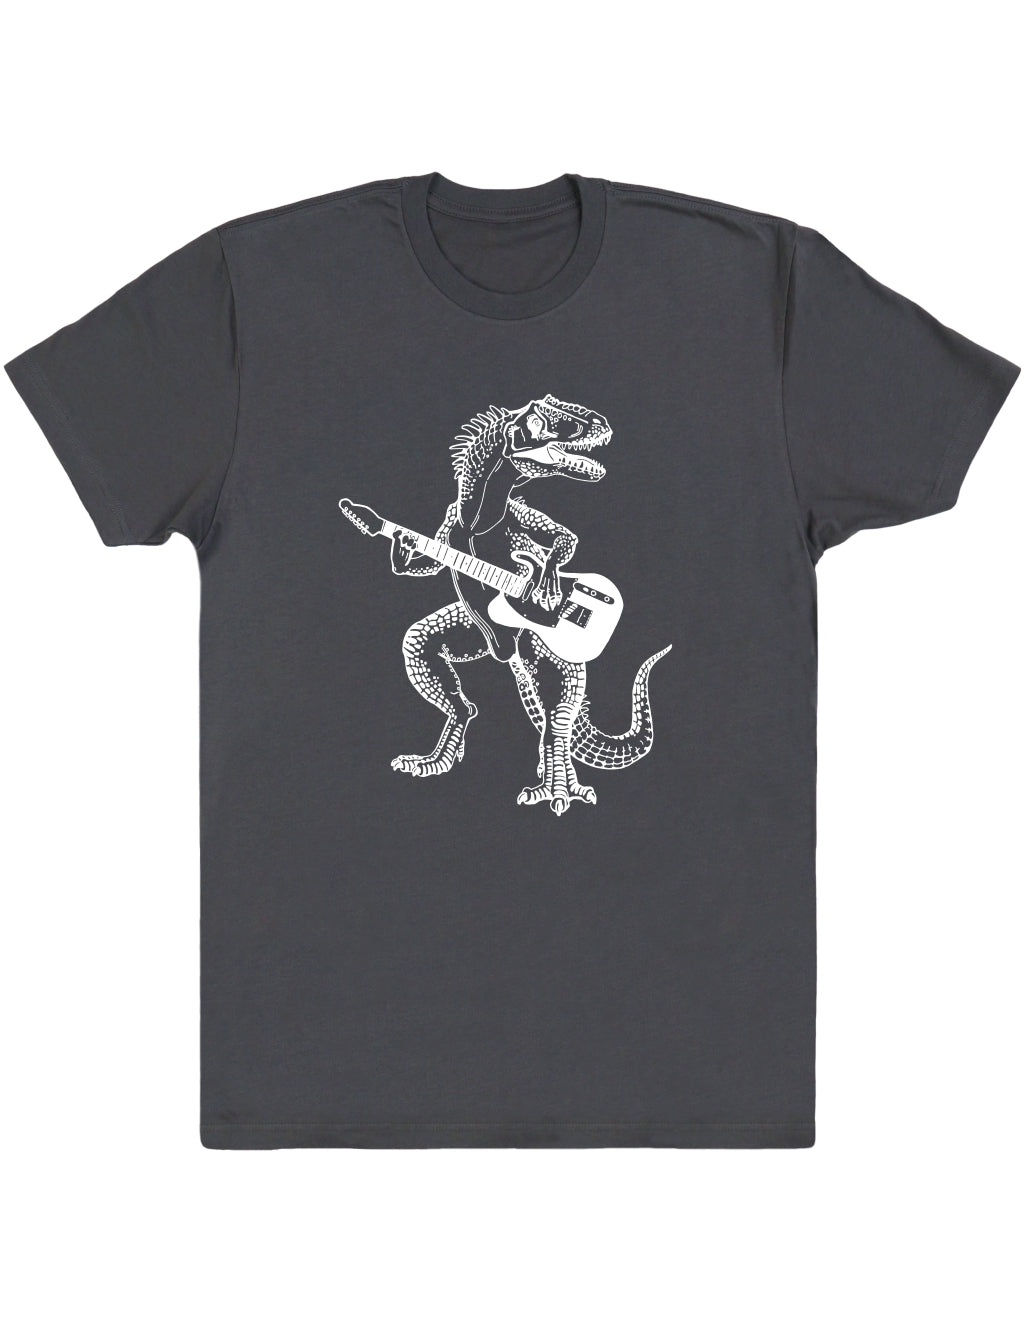 SEEMBO Dinosaur Playing Guitar Men's Cotton T-Shirt